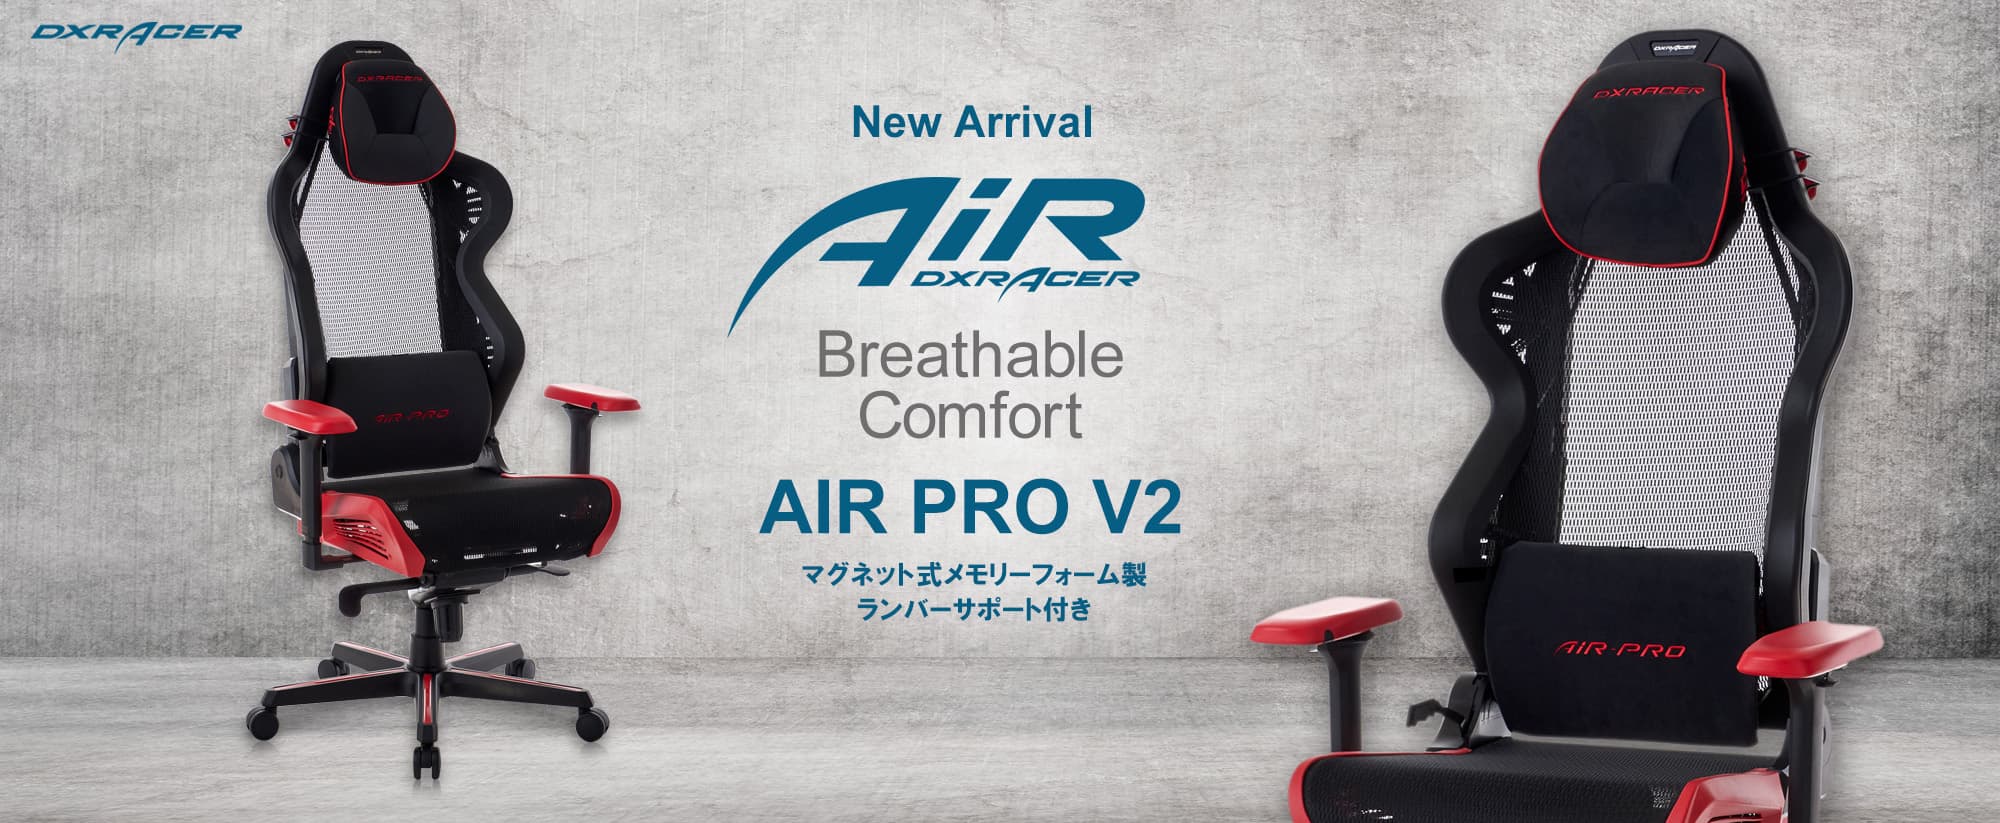 DXracer AIR-PRO(高機能モデル) V2